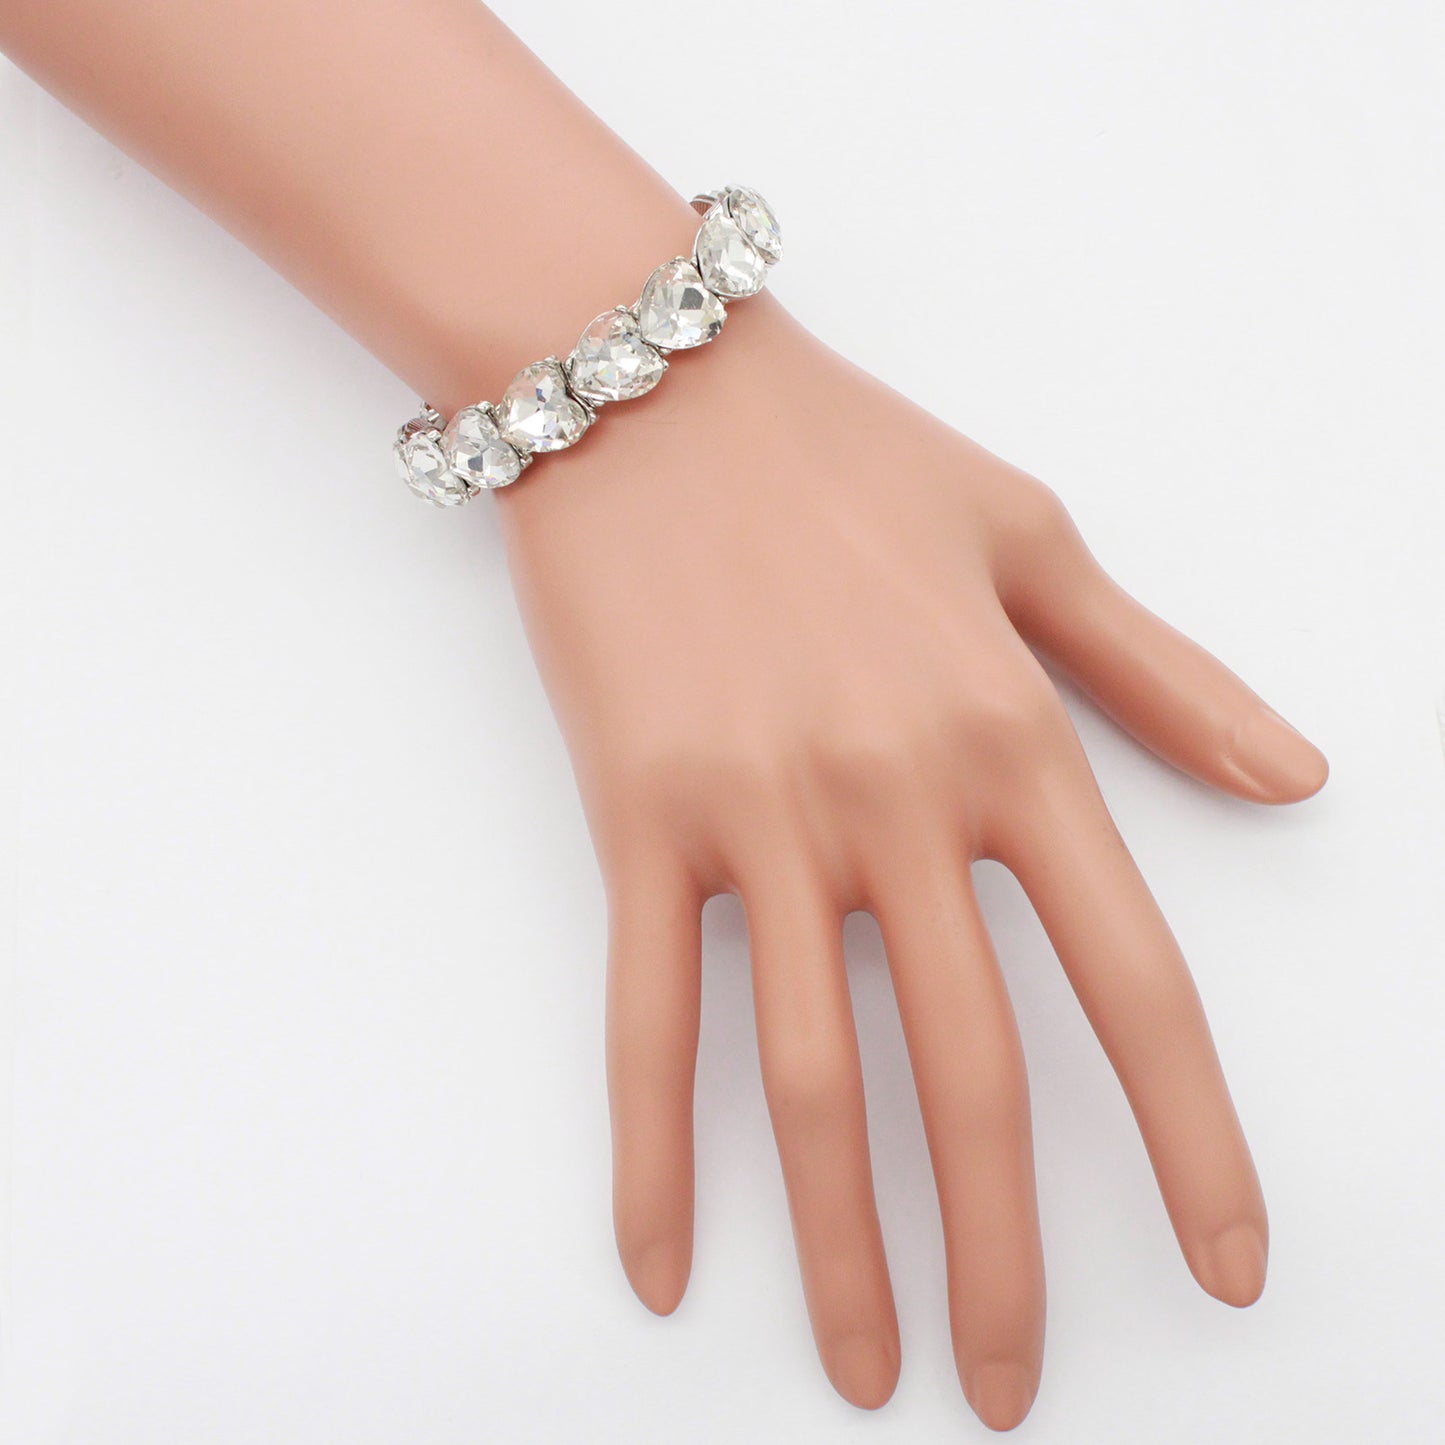 Lavencious Heart Shape Rhinestones Elastic Stretch Bracelet for Women (Silver Clear)